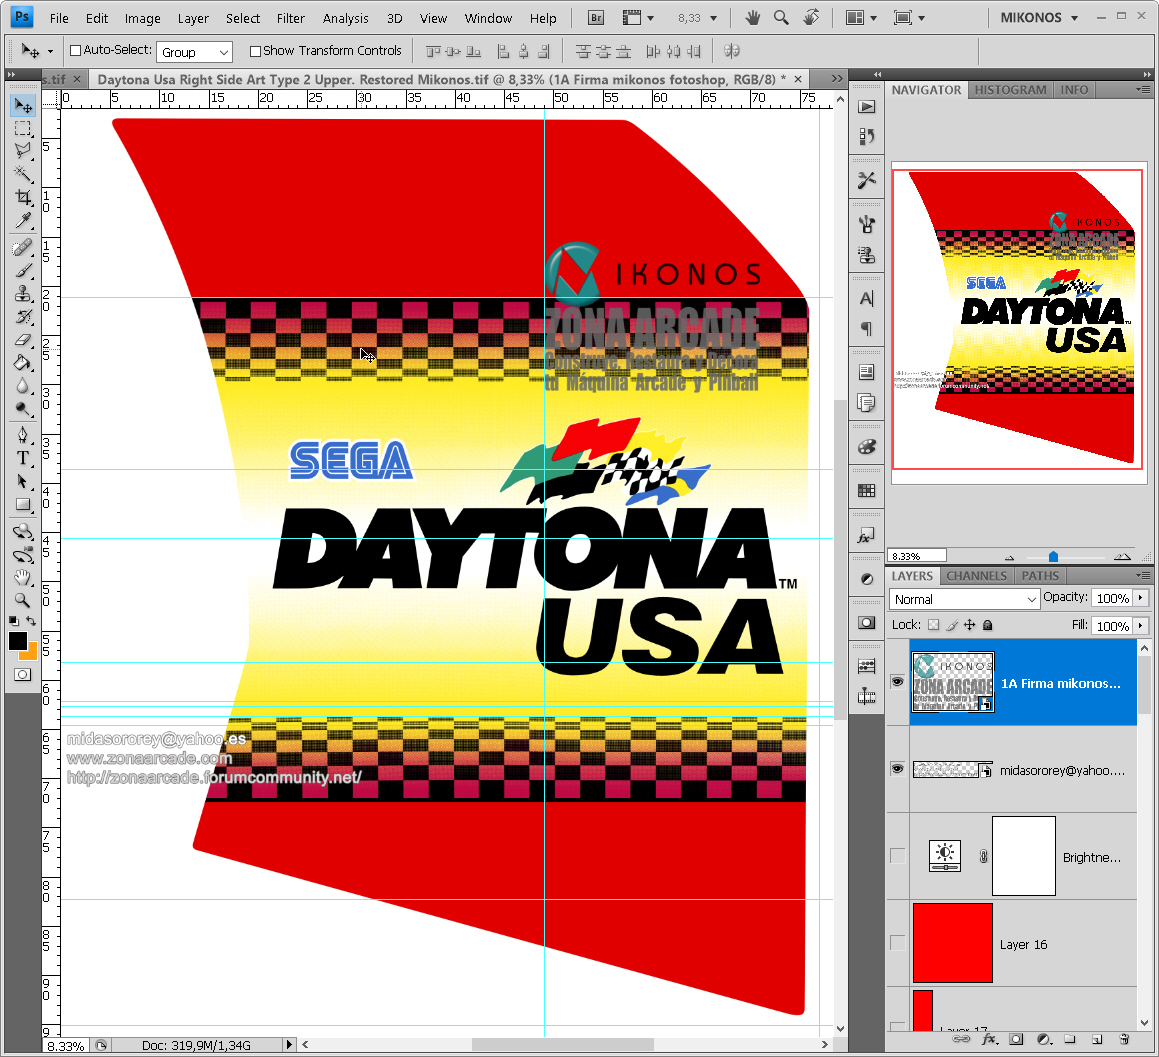 Daytona USA Right Side Art type2. Restored Mikonos1